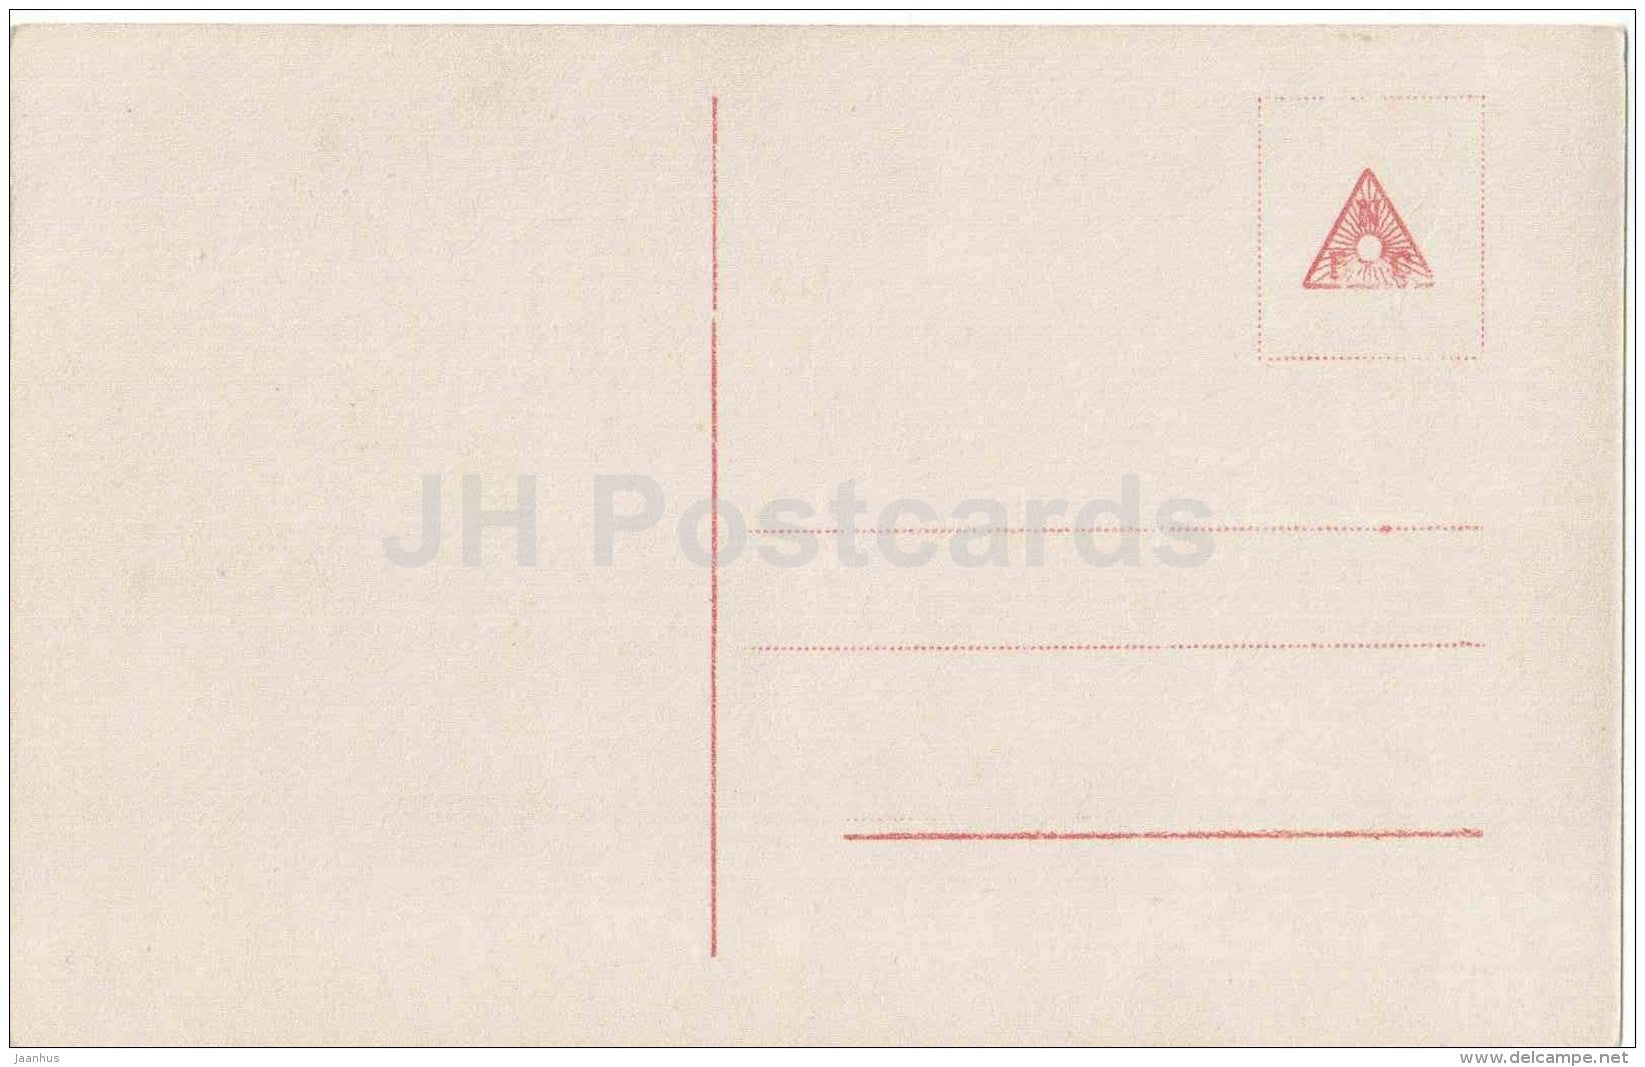 Aruth Wartan - movie actor - Ross verlag - 227/1 - old postcard - unused - JH Postcards